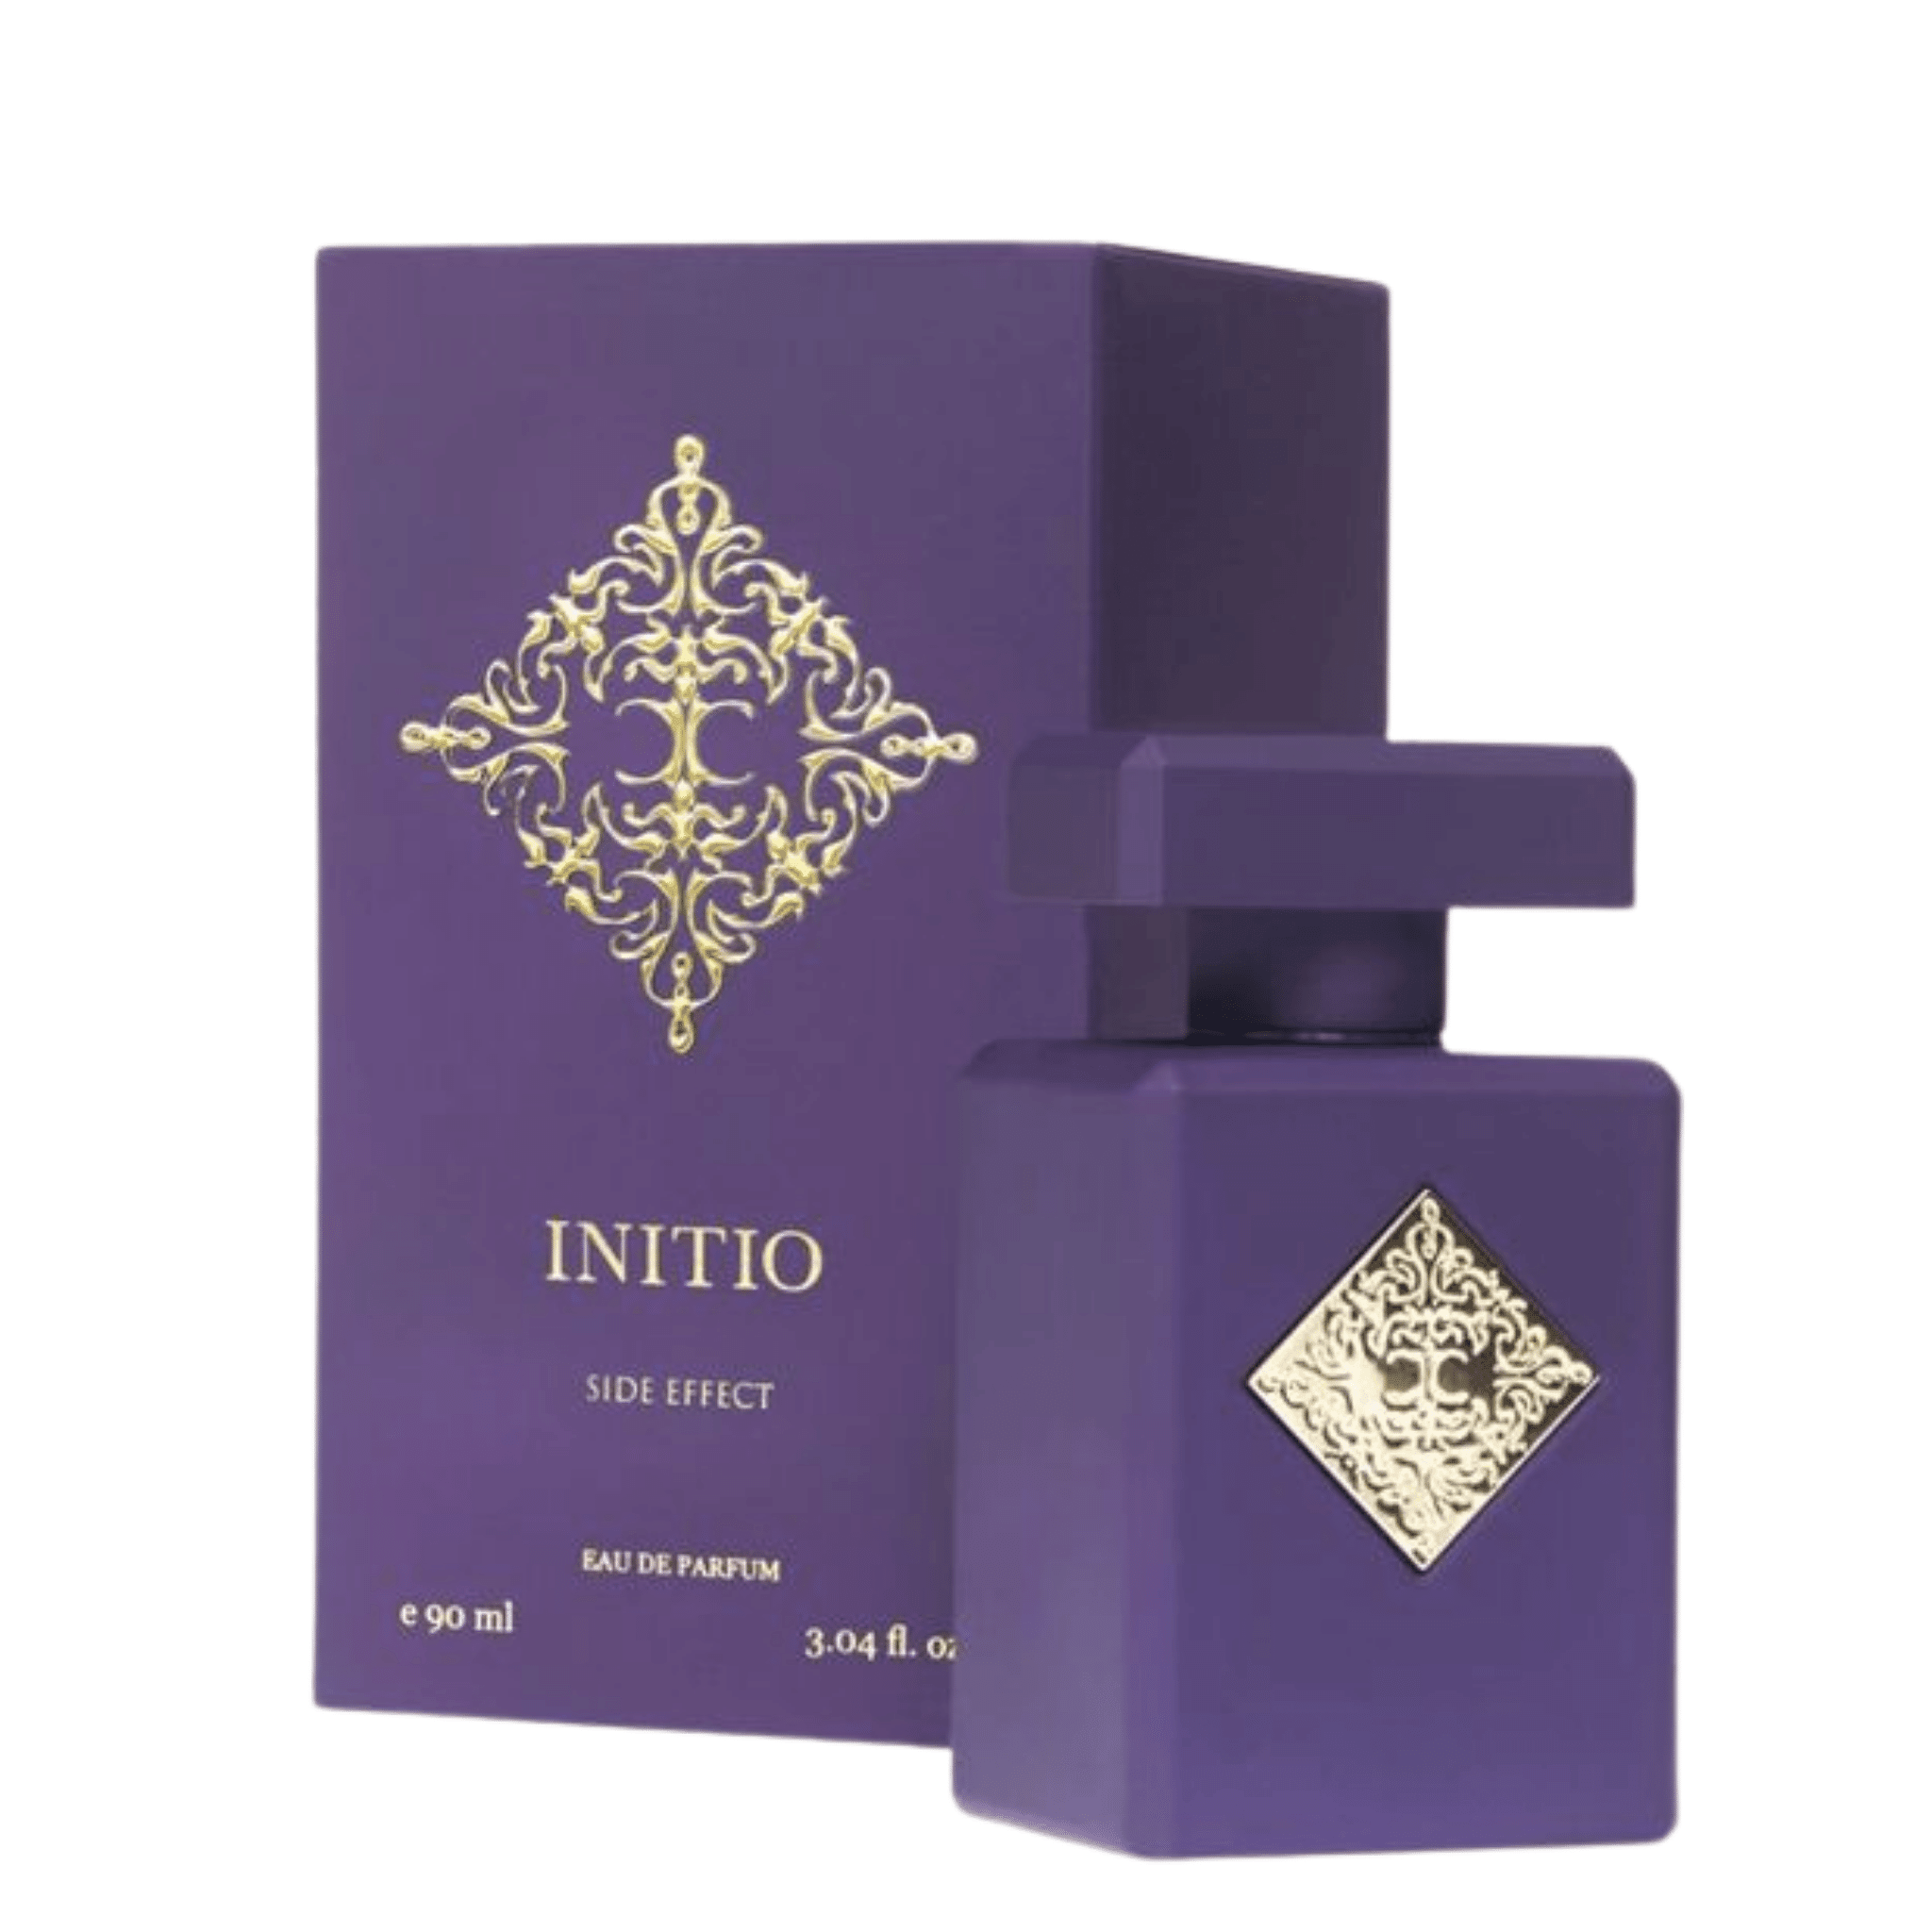 Side Effect perfume